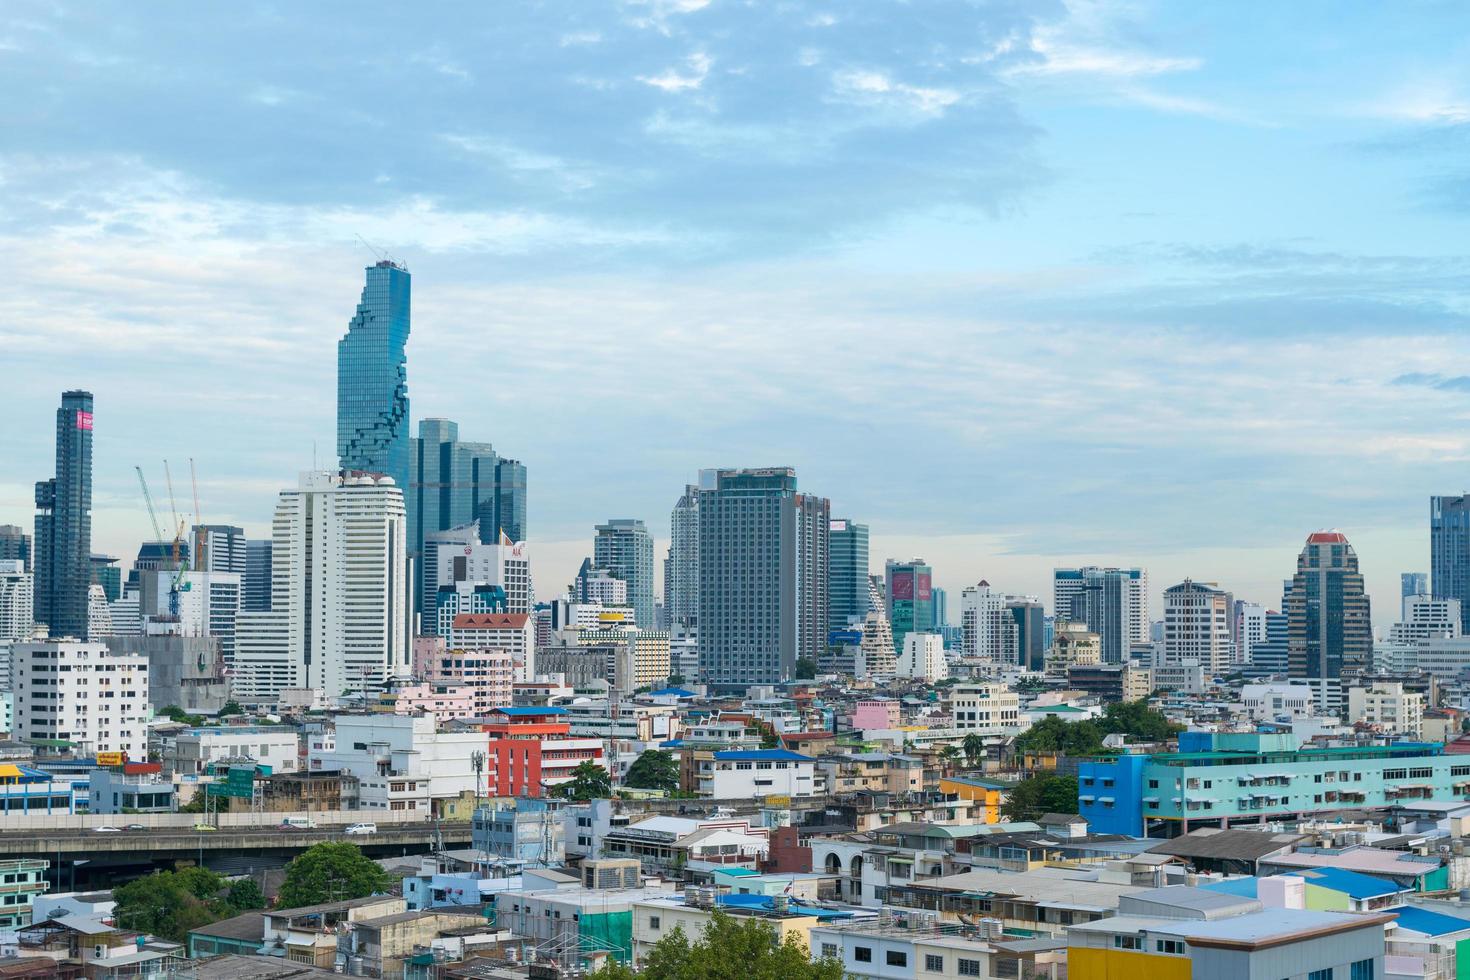 Skyline der Stadt Bangkok foto